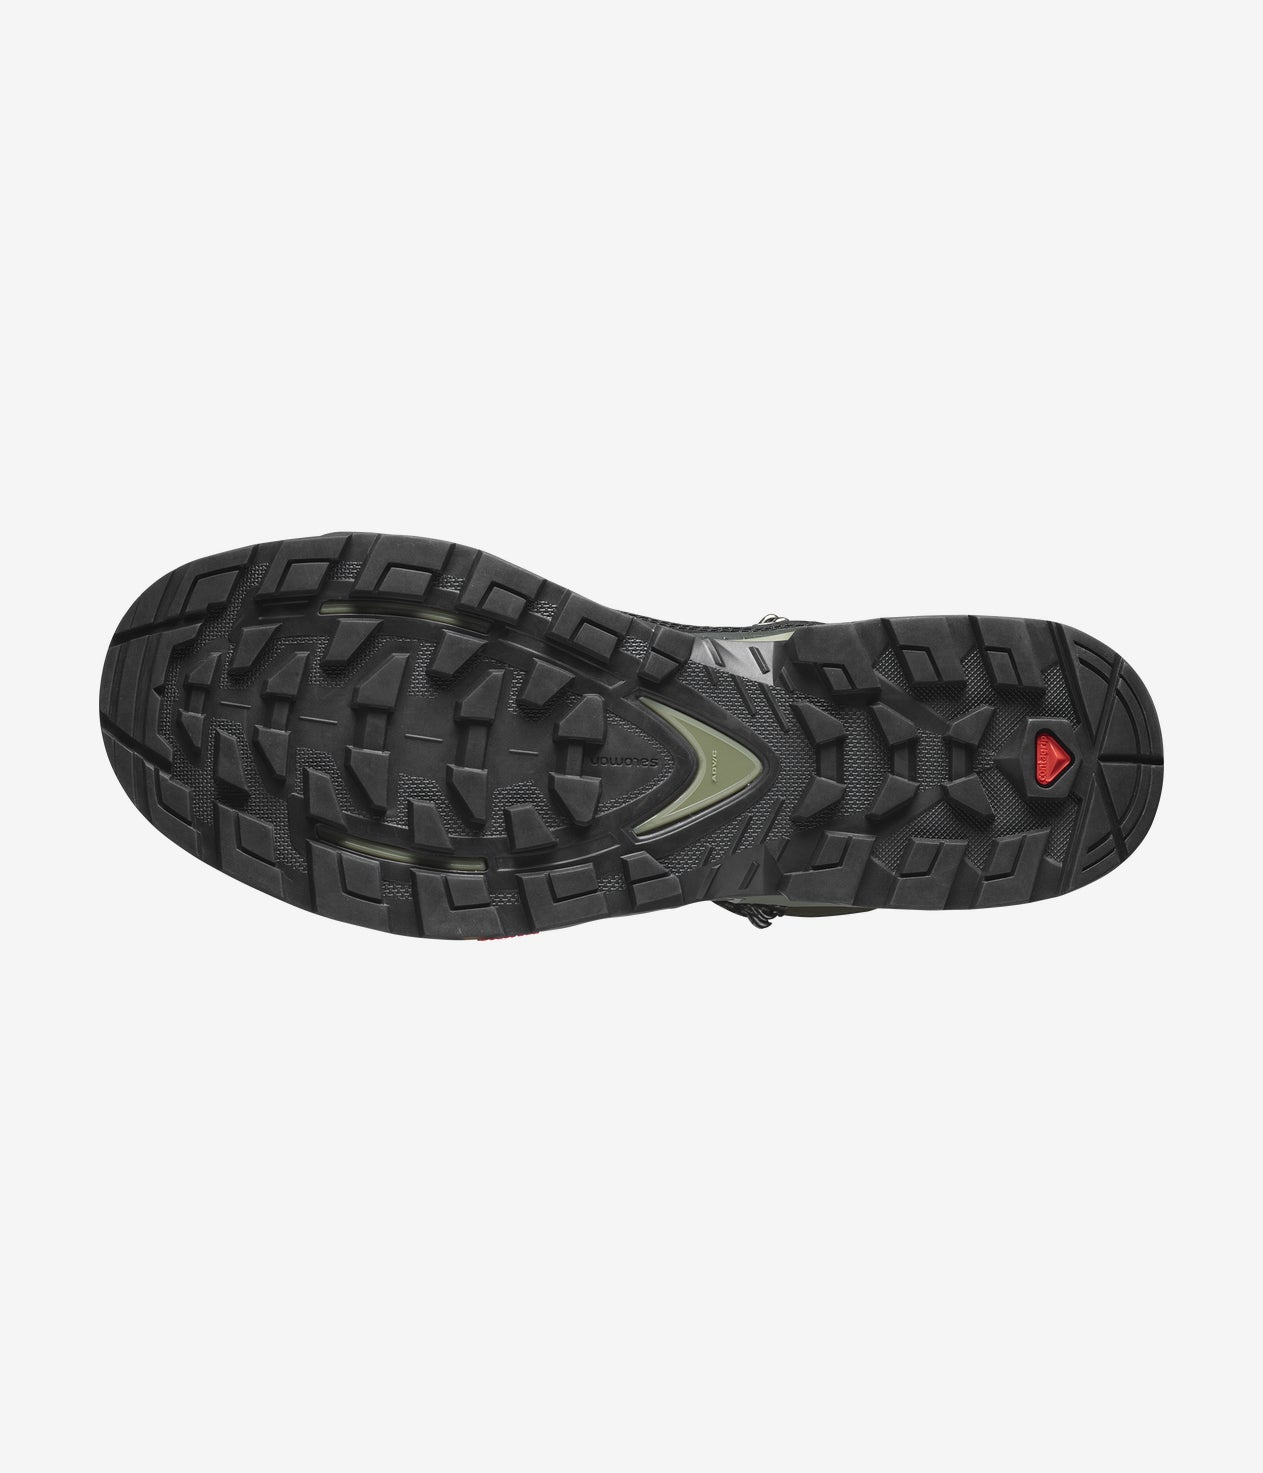 Salomon Quest Element Gore-TEX Hiking Boots for Men,Black/Green